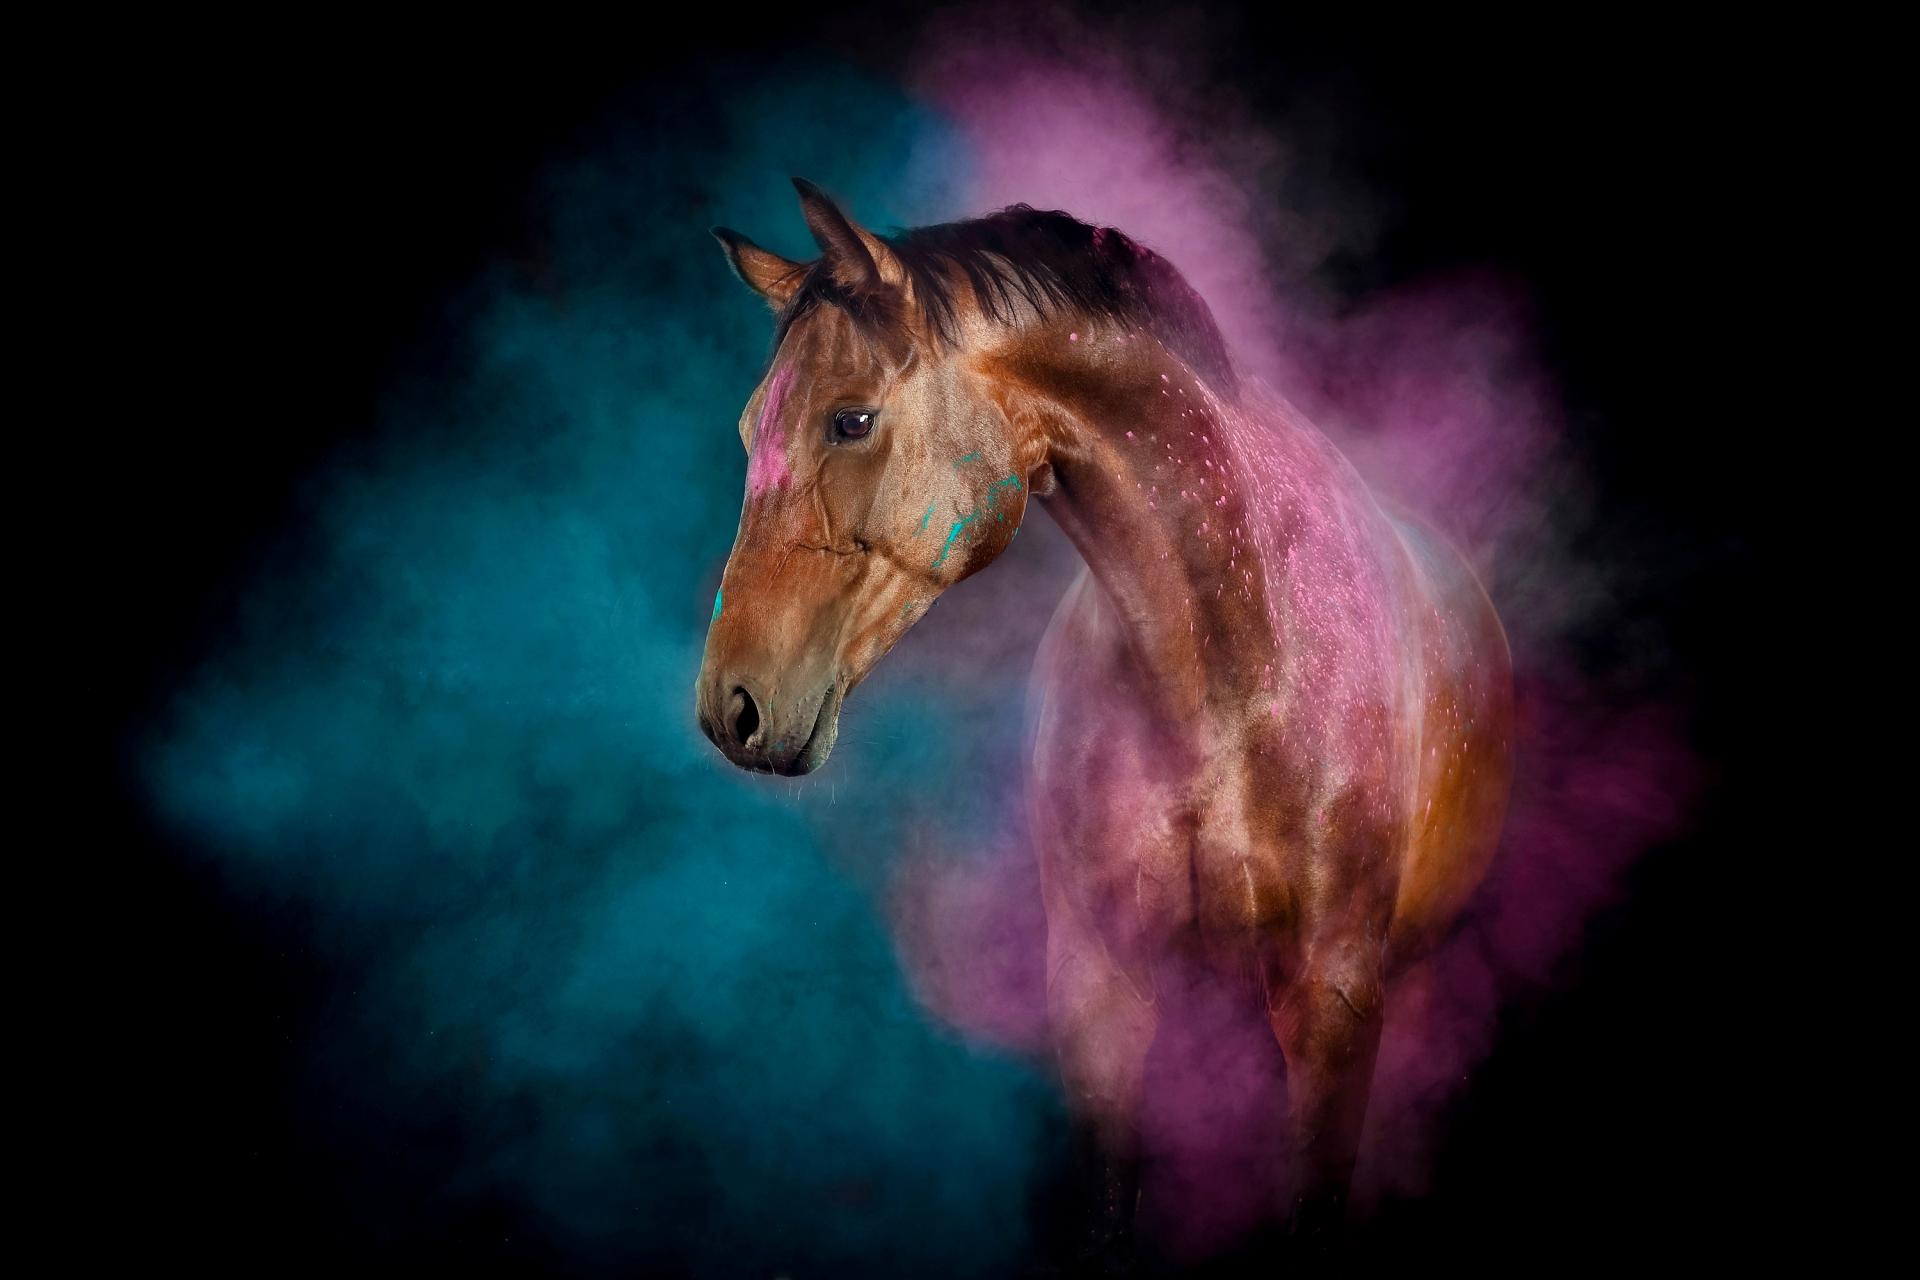 London Photography Awards Winner - Holi Horses